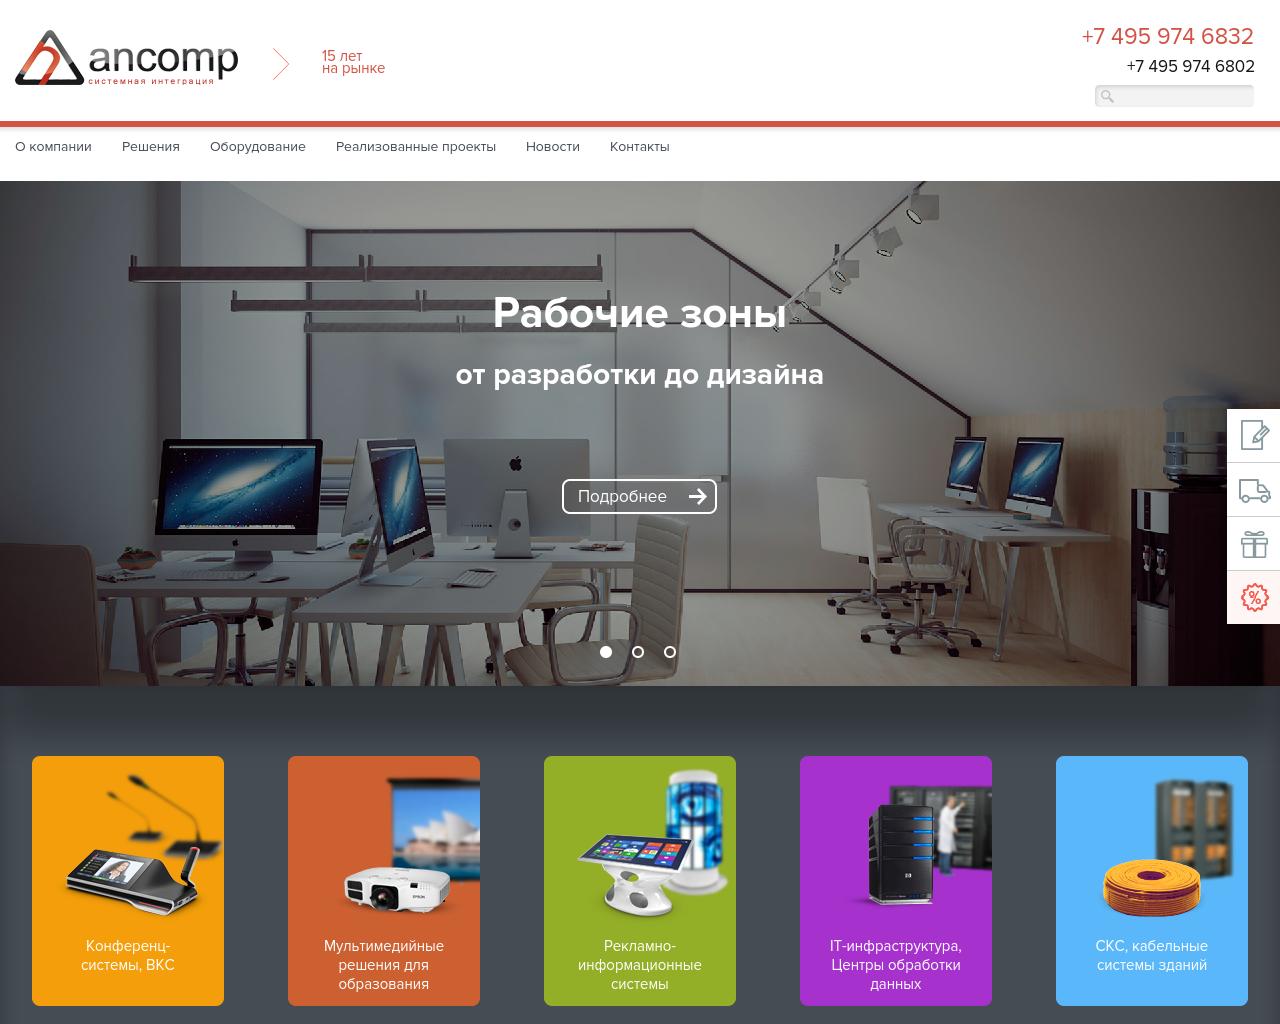 Изображение сайта ancomp.ru в разрешении 1280x1024